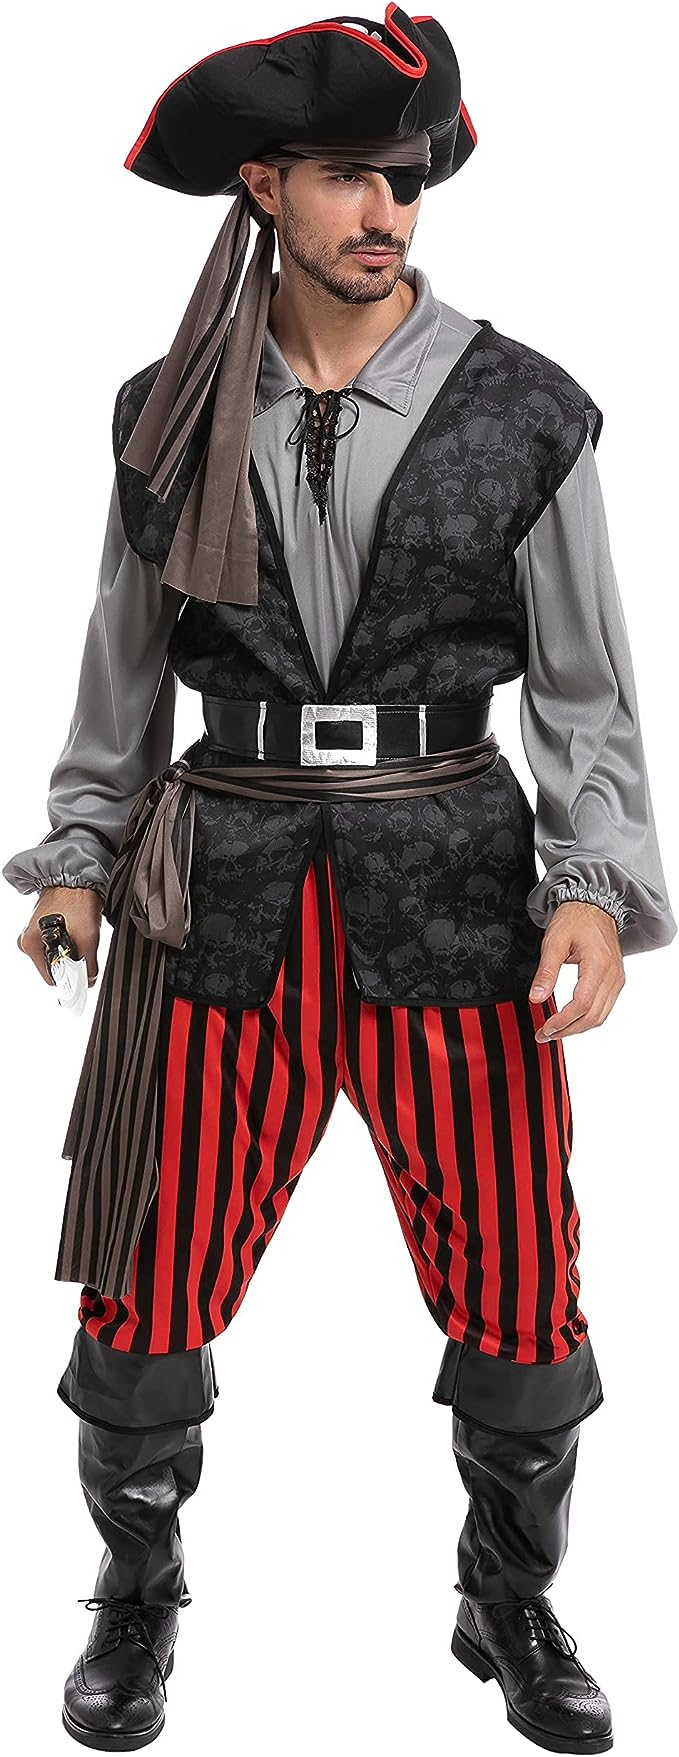 Men's Pirate Halloween Costume